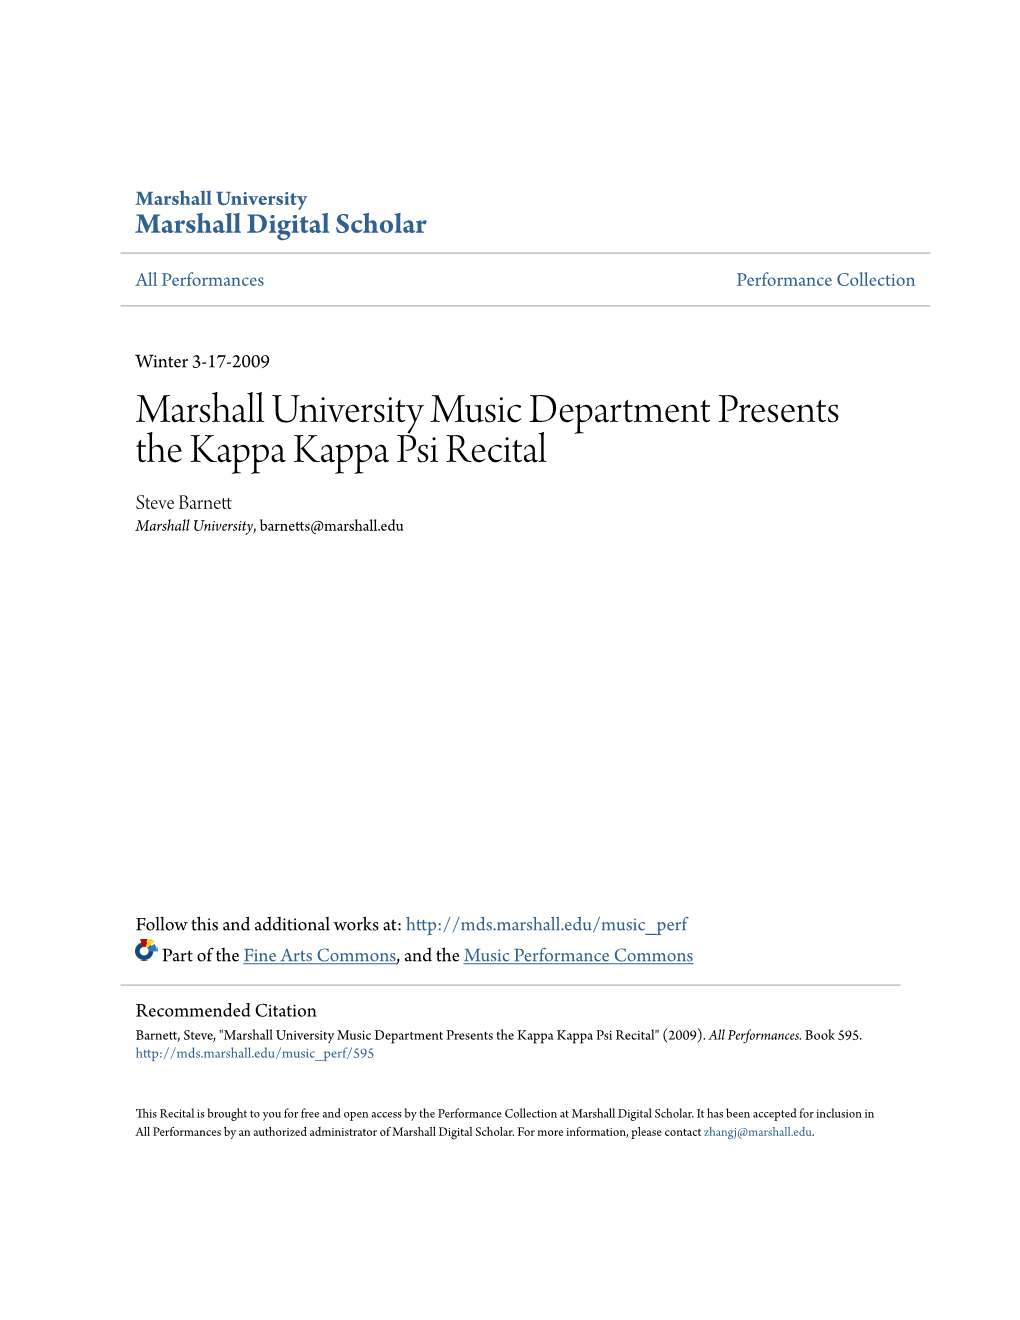 Marshall University Music Department Presents the Kappa Kappa Psi Recital Steve Barnett Marshall University, Barnetts@Marshall.Edu